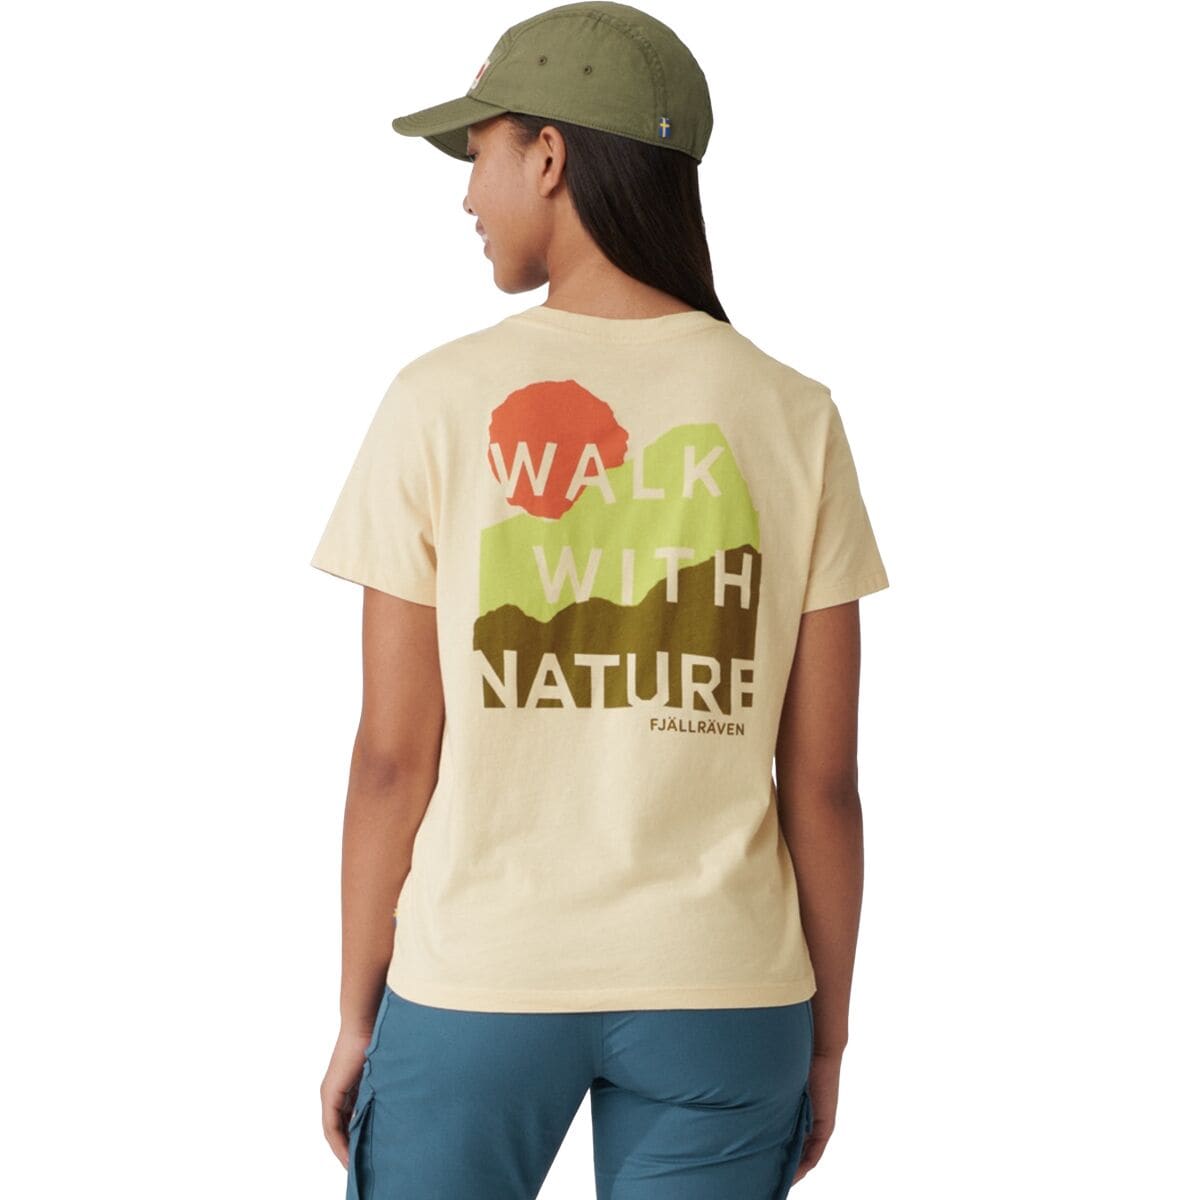 Nature T-Shirt - Women